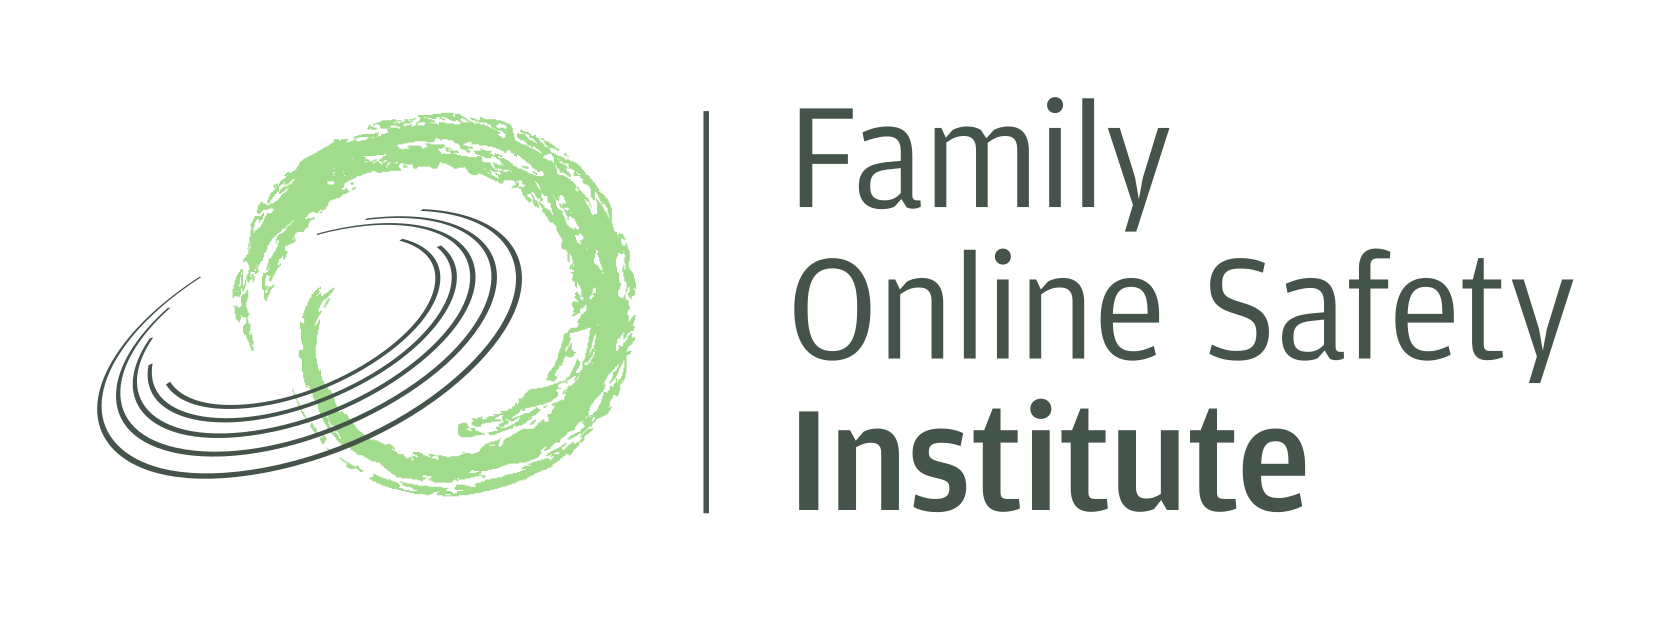 Family Online Safety Institute Logo